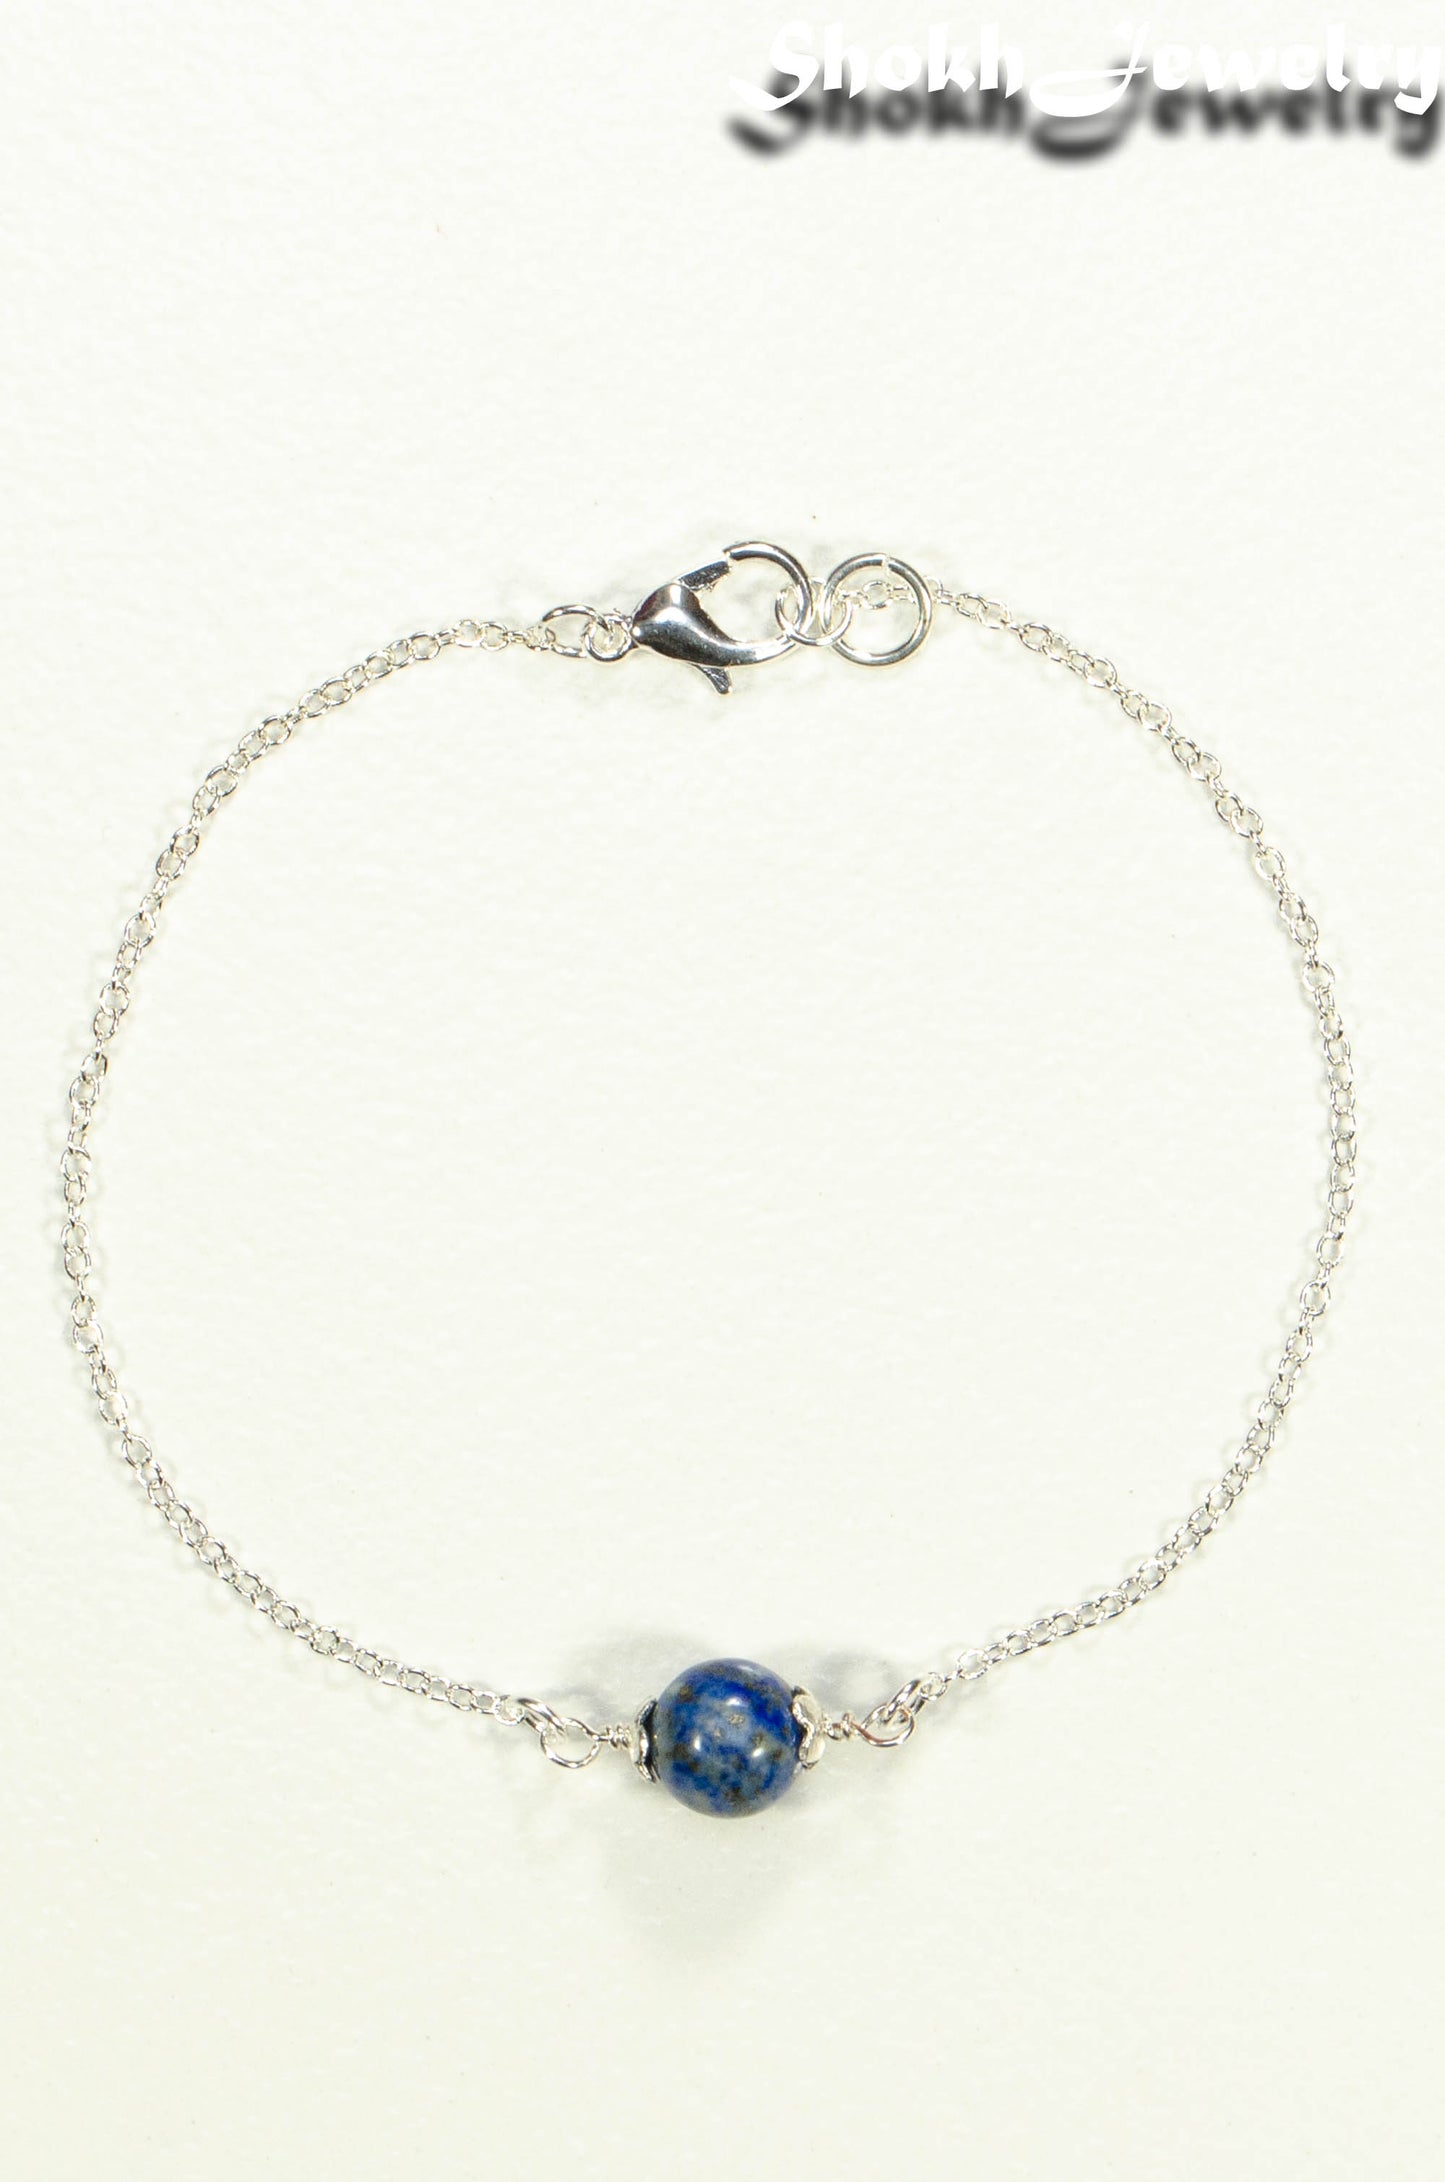 Top view of Minimal Lapis Lazuli Bracelet.